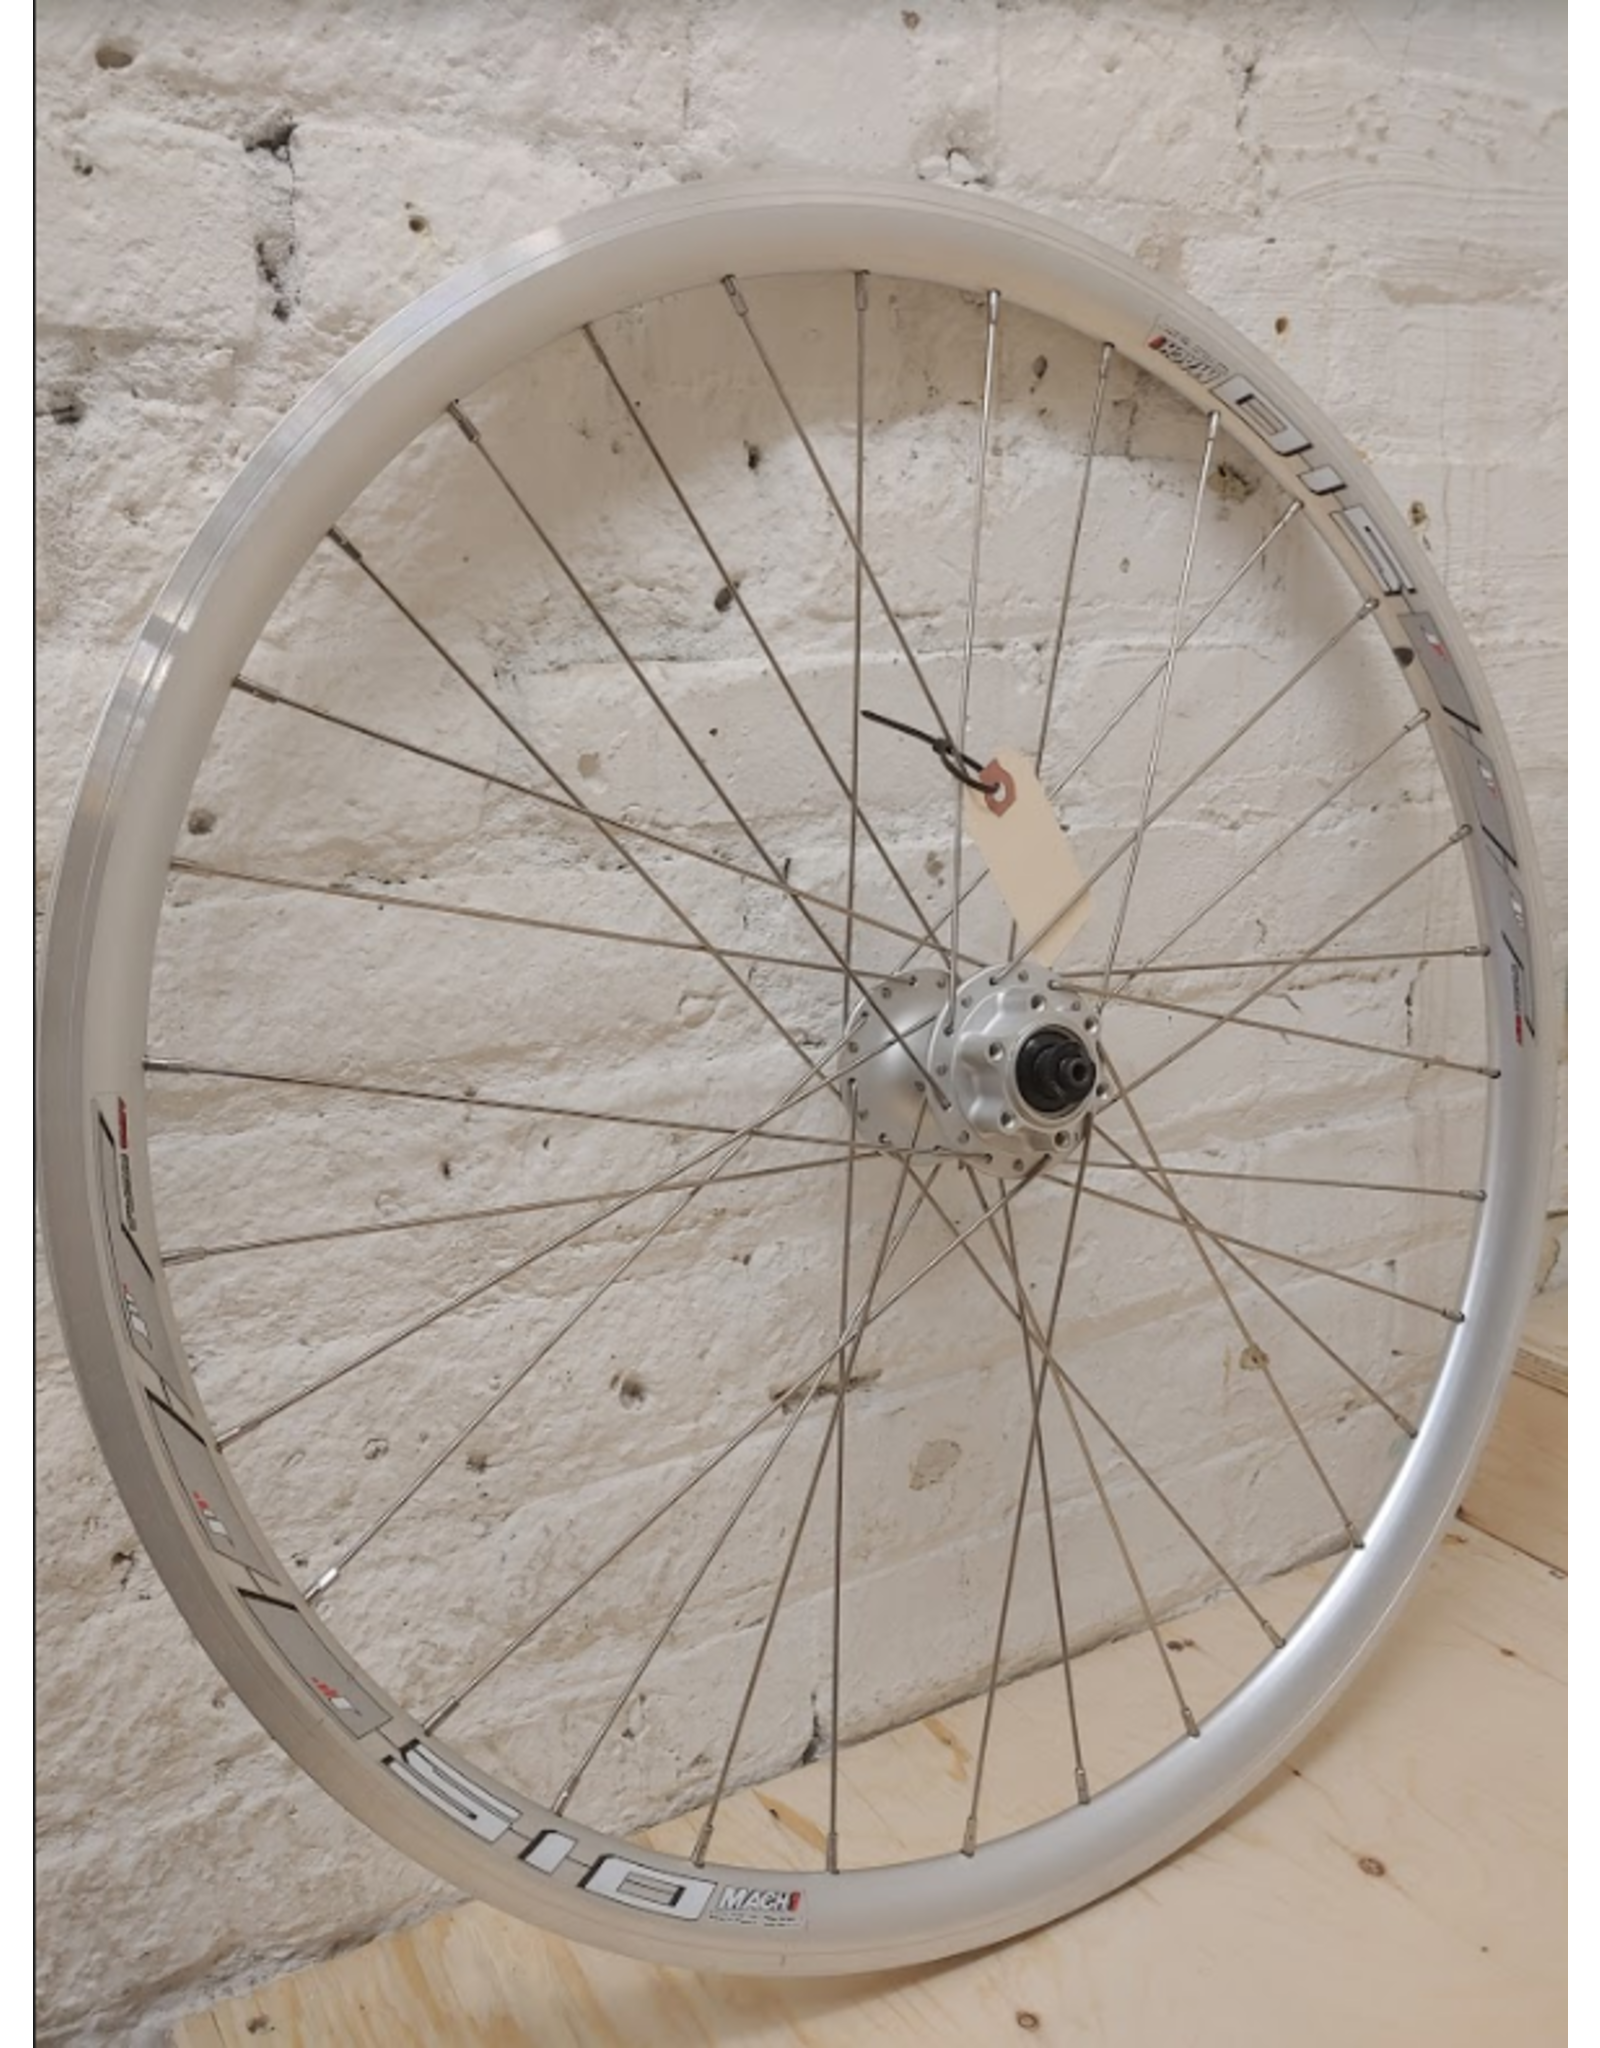 Natural Cycleworks Handbuilt Wheel - 26" Mach 1 Silver - Shimano M475 Front Silver - Straight Guage Spokes